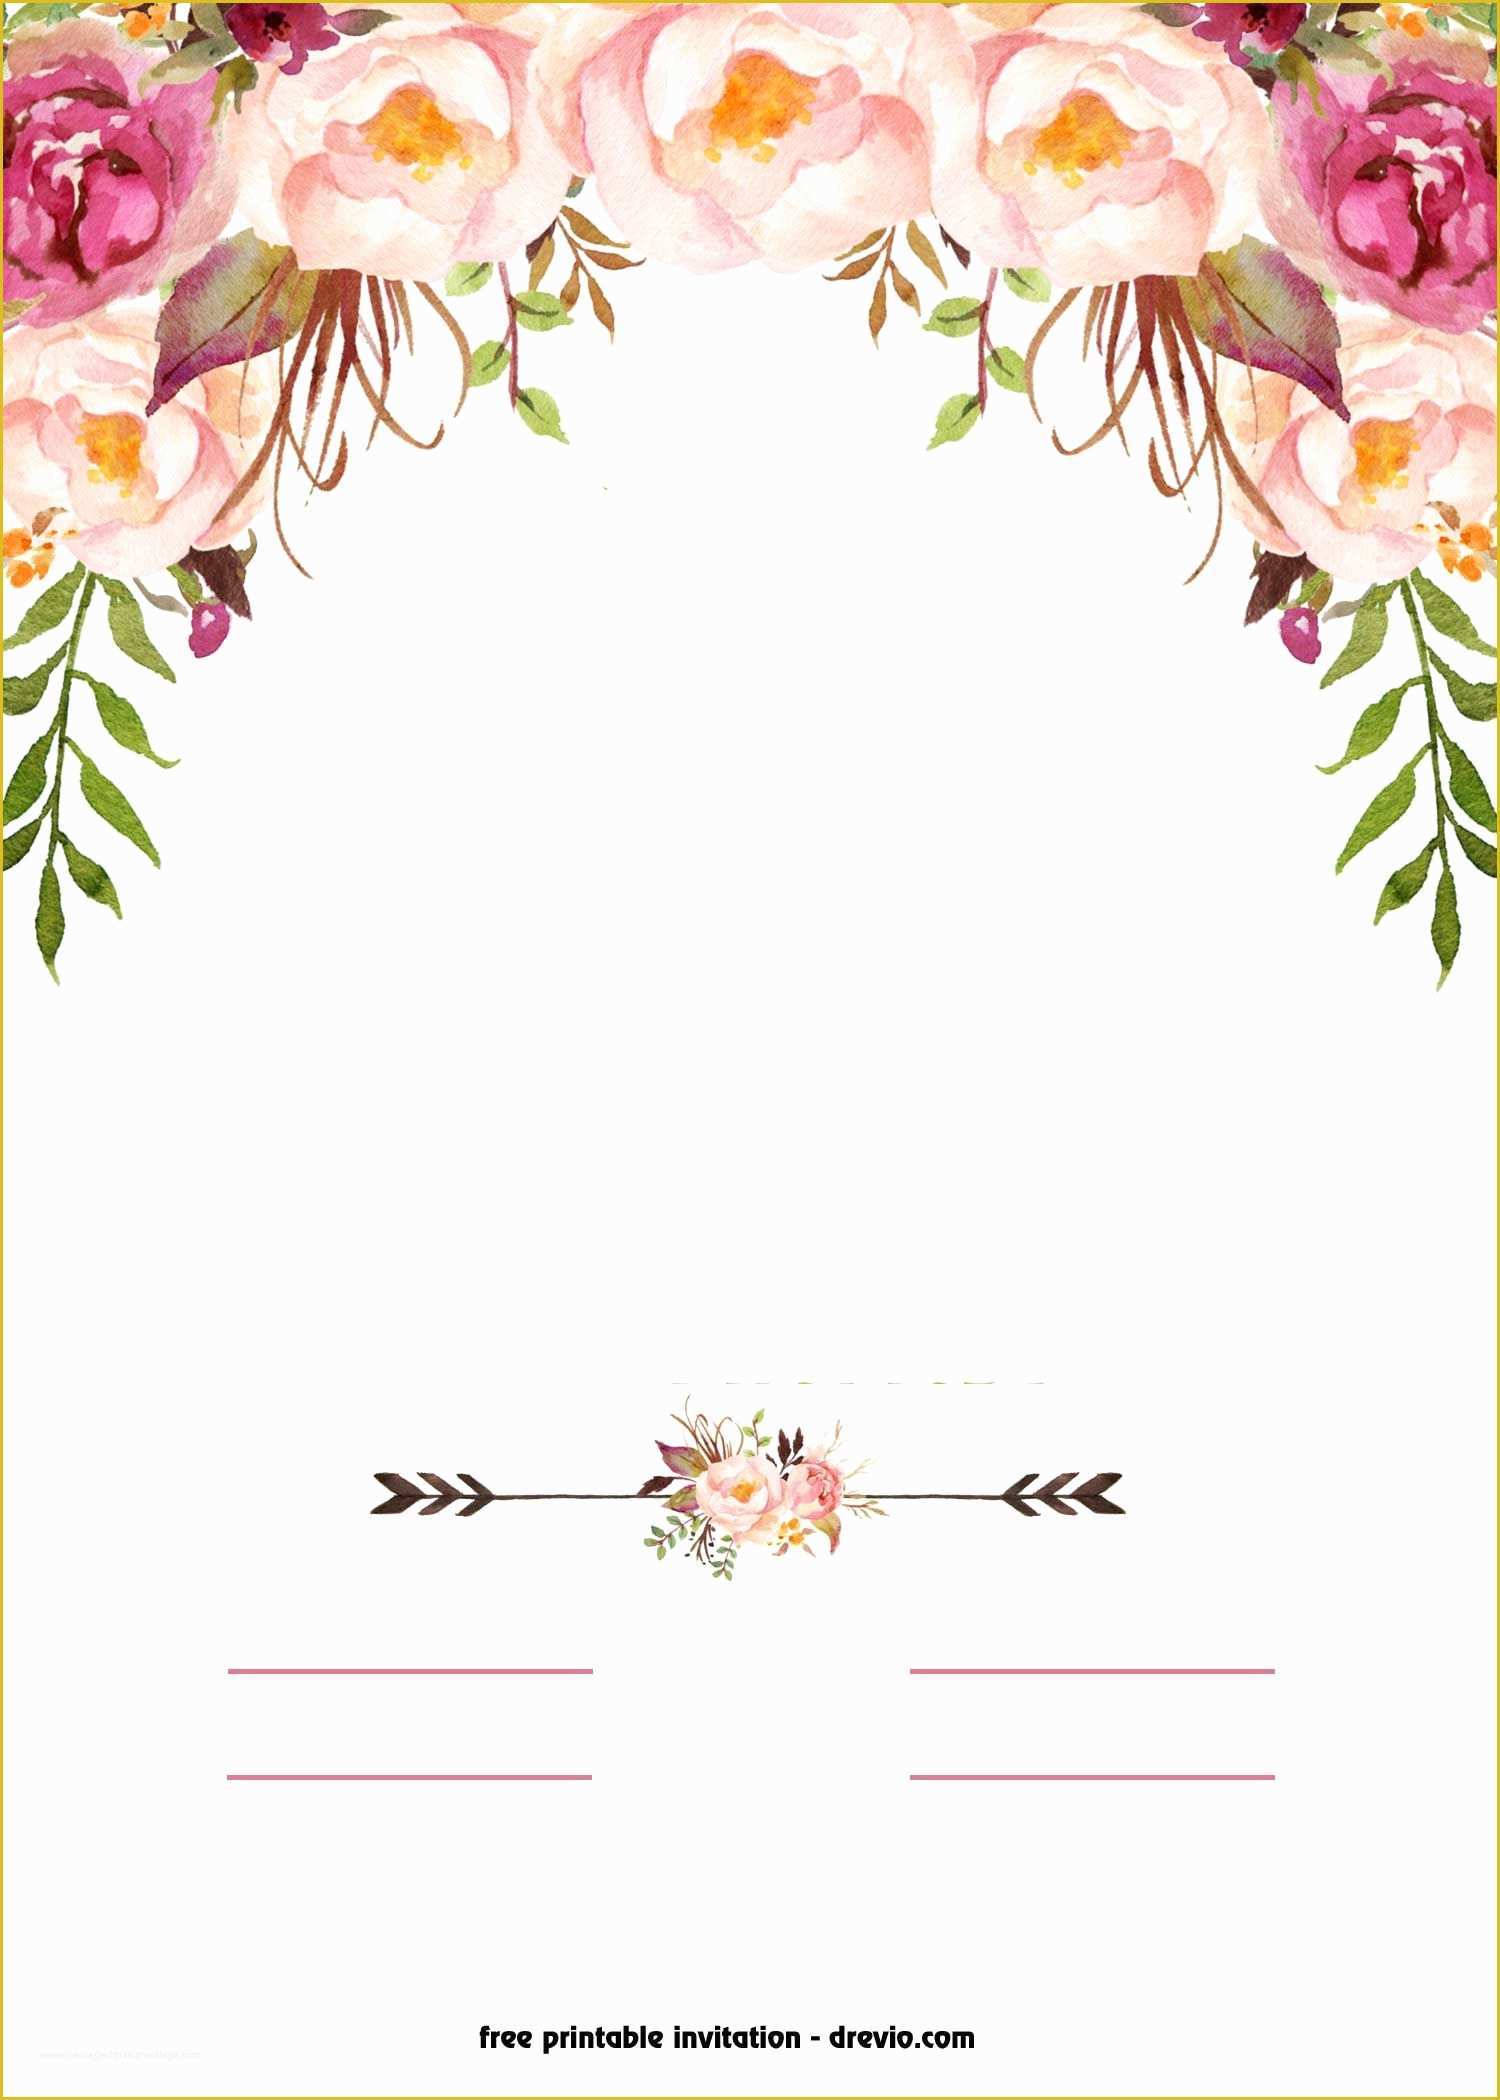 Free Printable Birthday Invitation Templates for Word Of Free Printable Boho Chic Flower Baby Shower Invitation